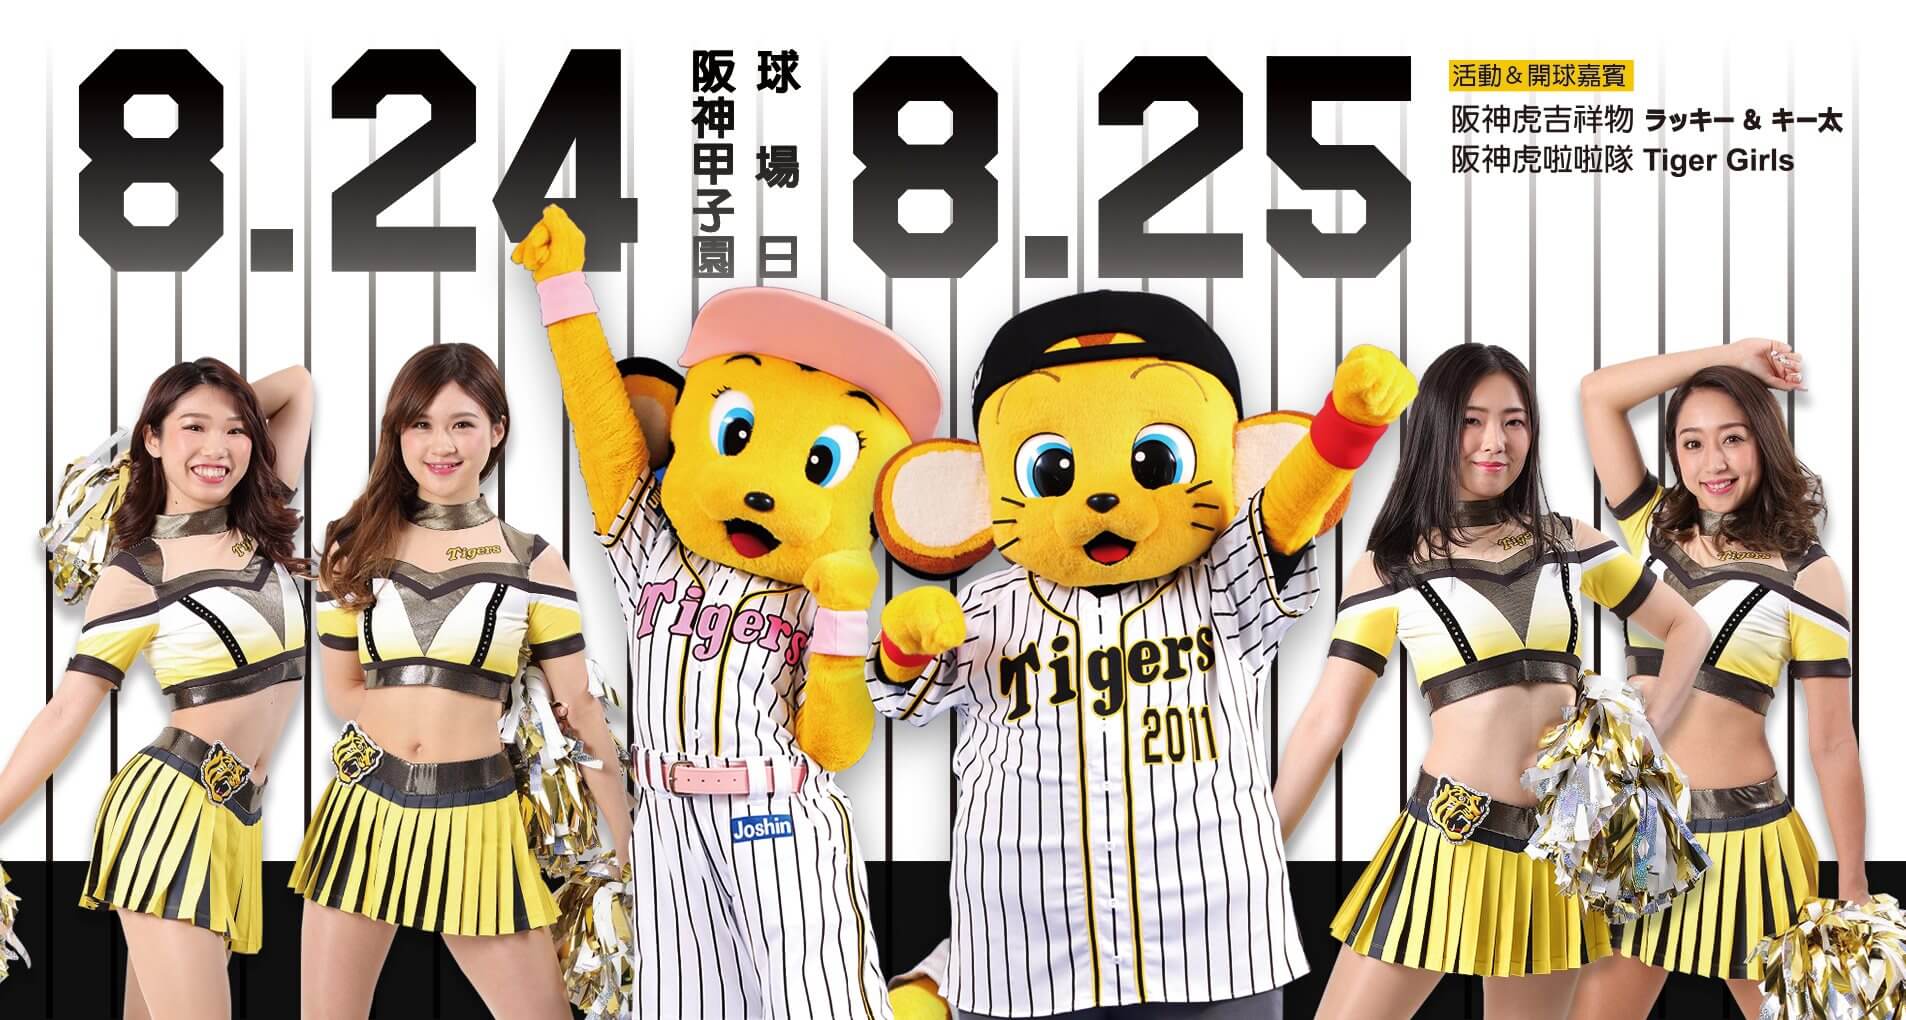 Hanshin Tigers unveil new unis